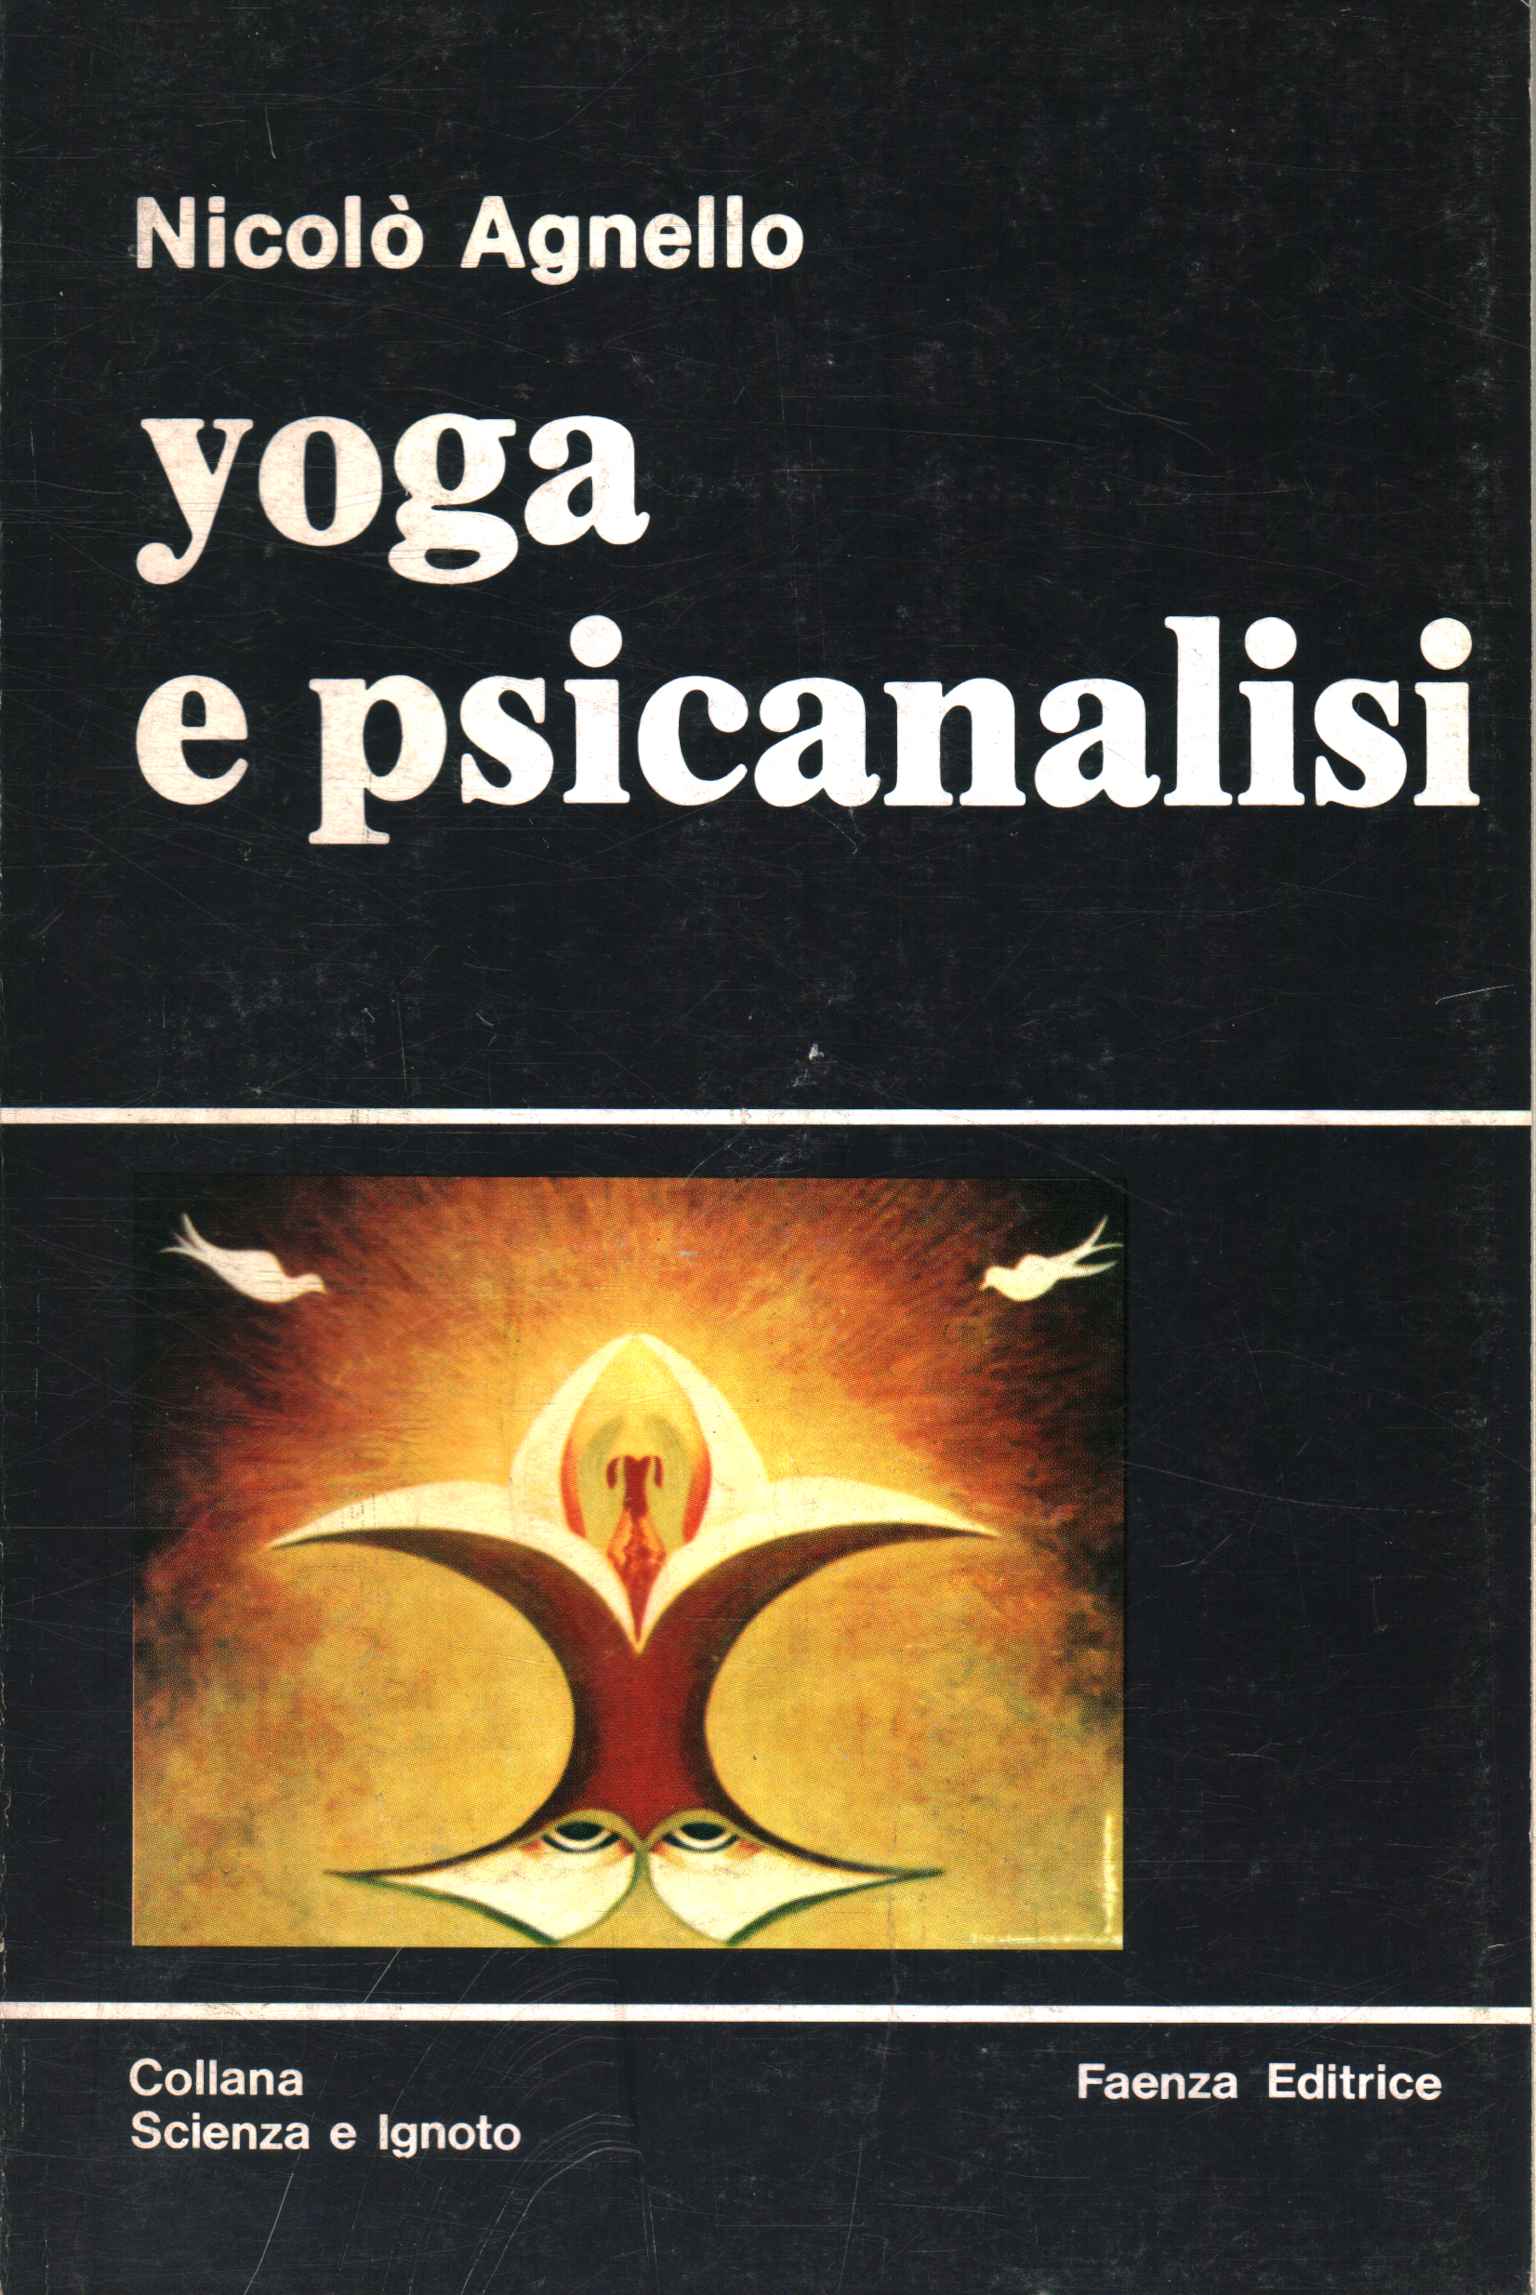 Yoga and psychoanalysis